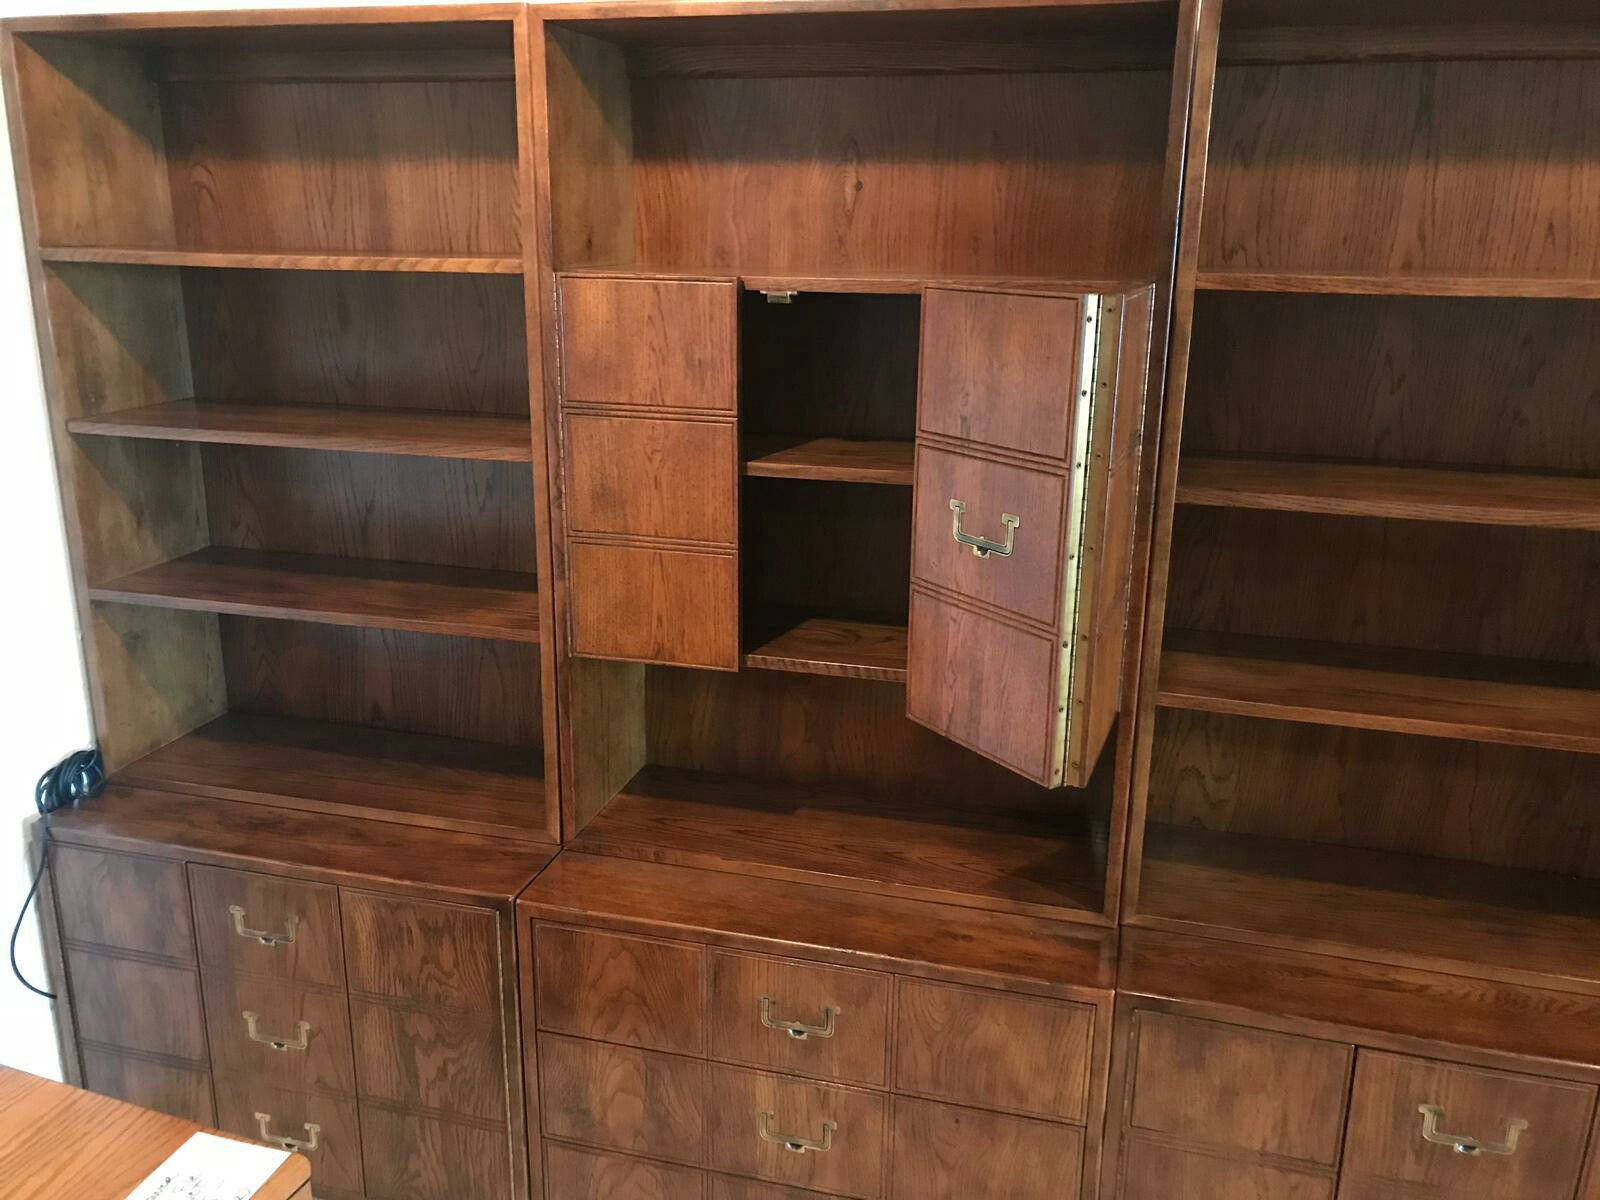 Henredon fine furniture book shelves